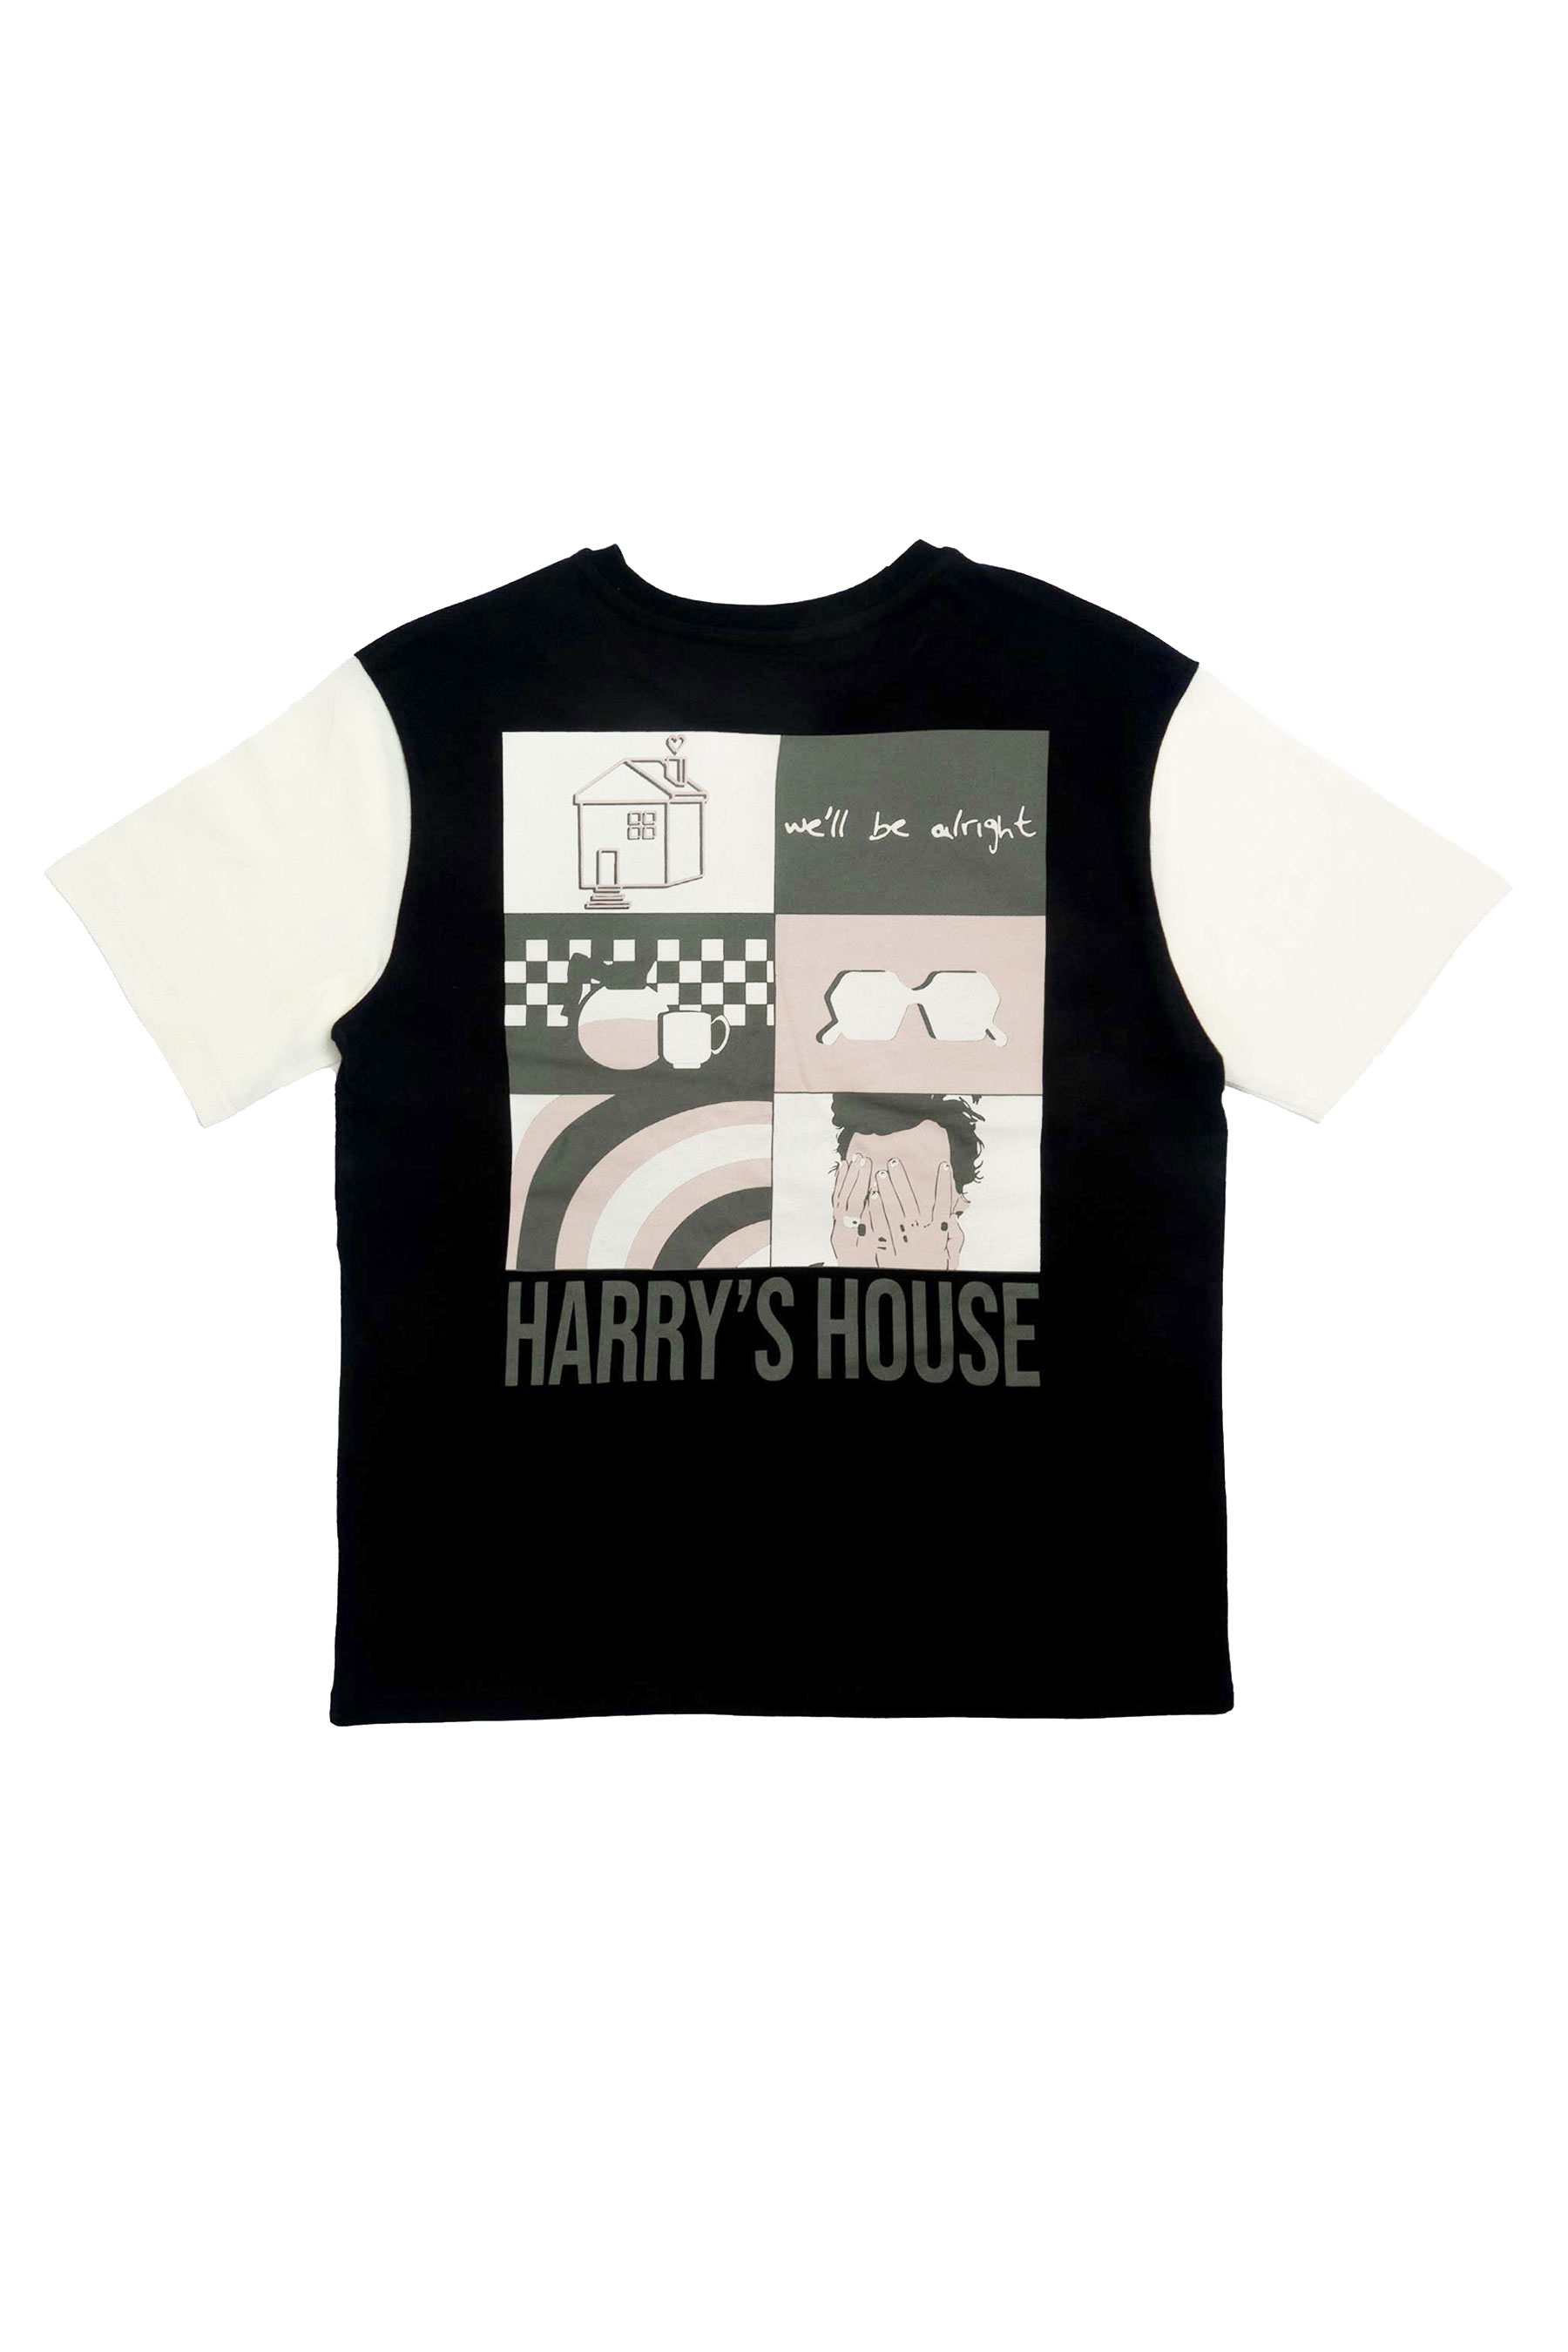 harry's house tshirt